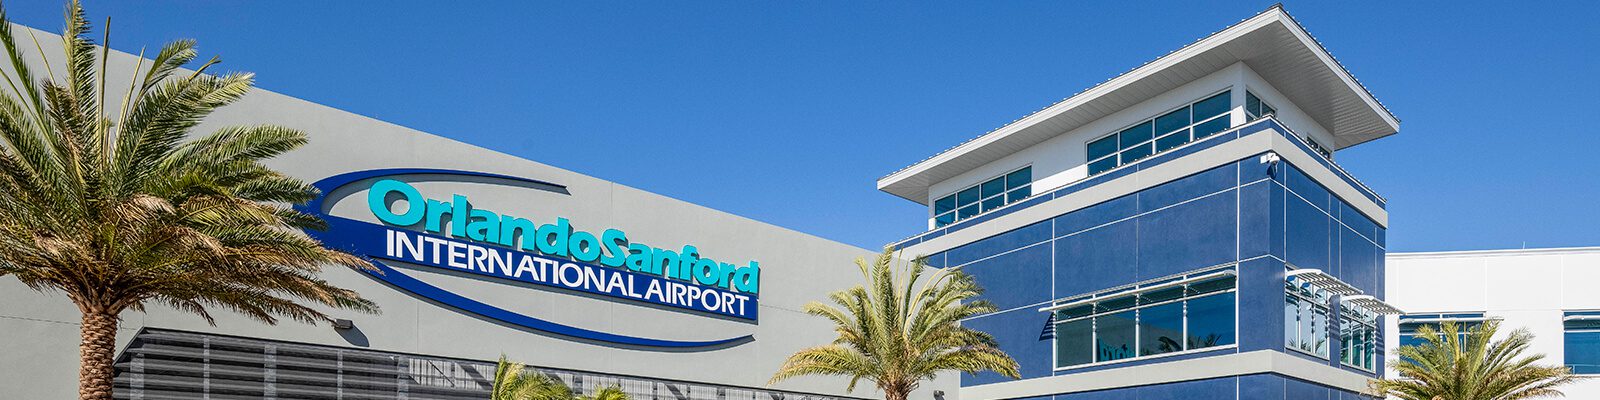 Airport Master Plan - Orlando Sanford International Airport